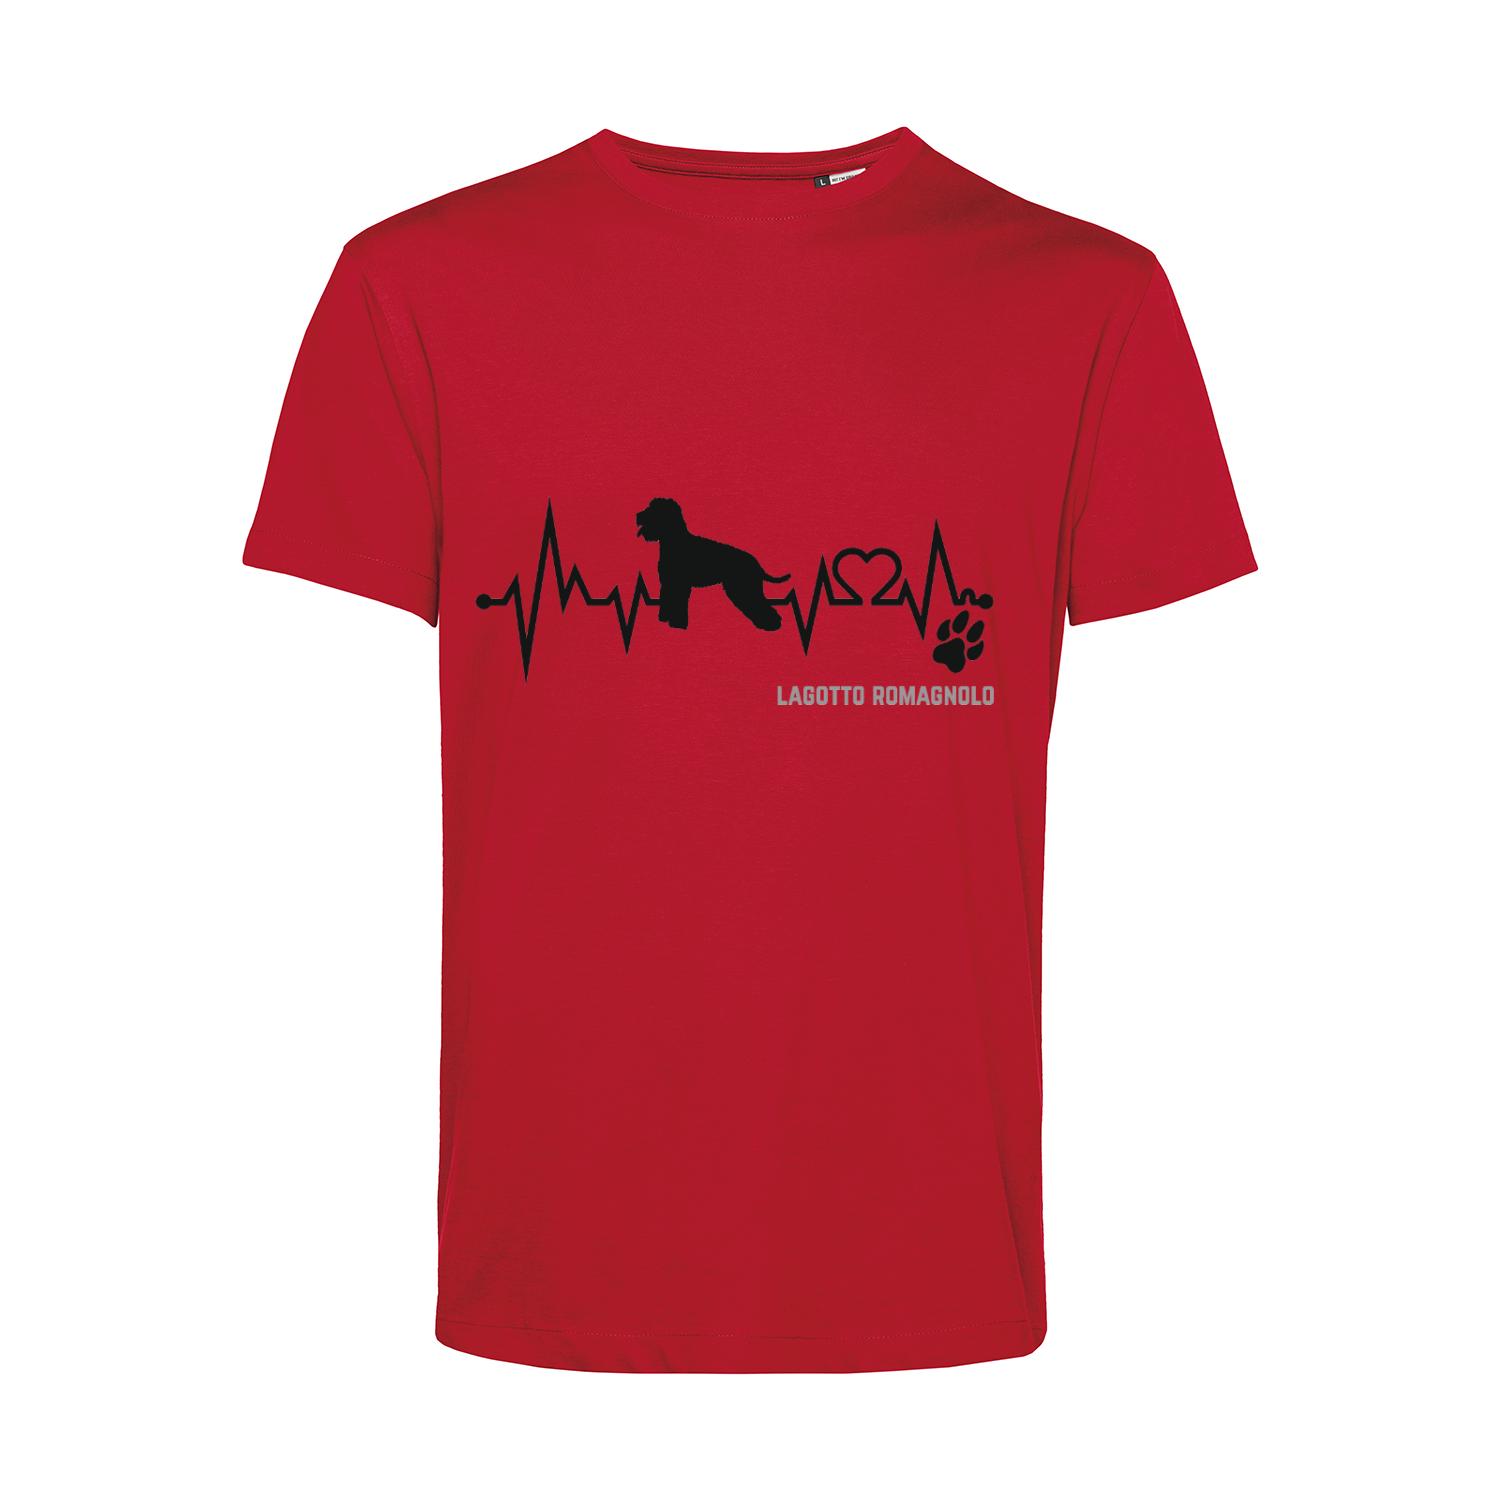 Nachhaltiges T-Shirt Herren Hunde - Lagotto Romagnolo Herzstromkurve